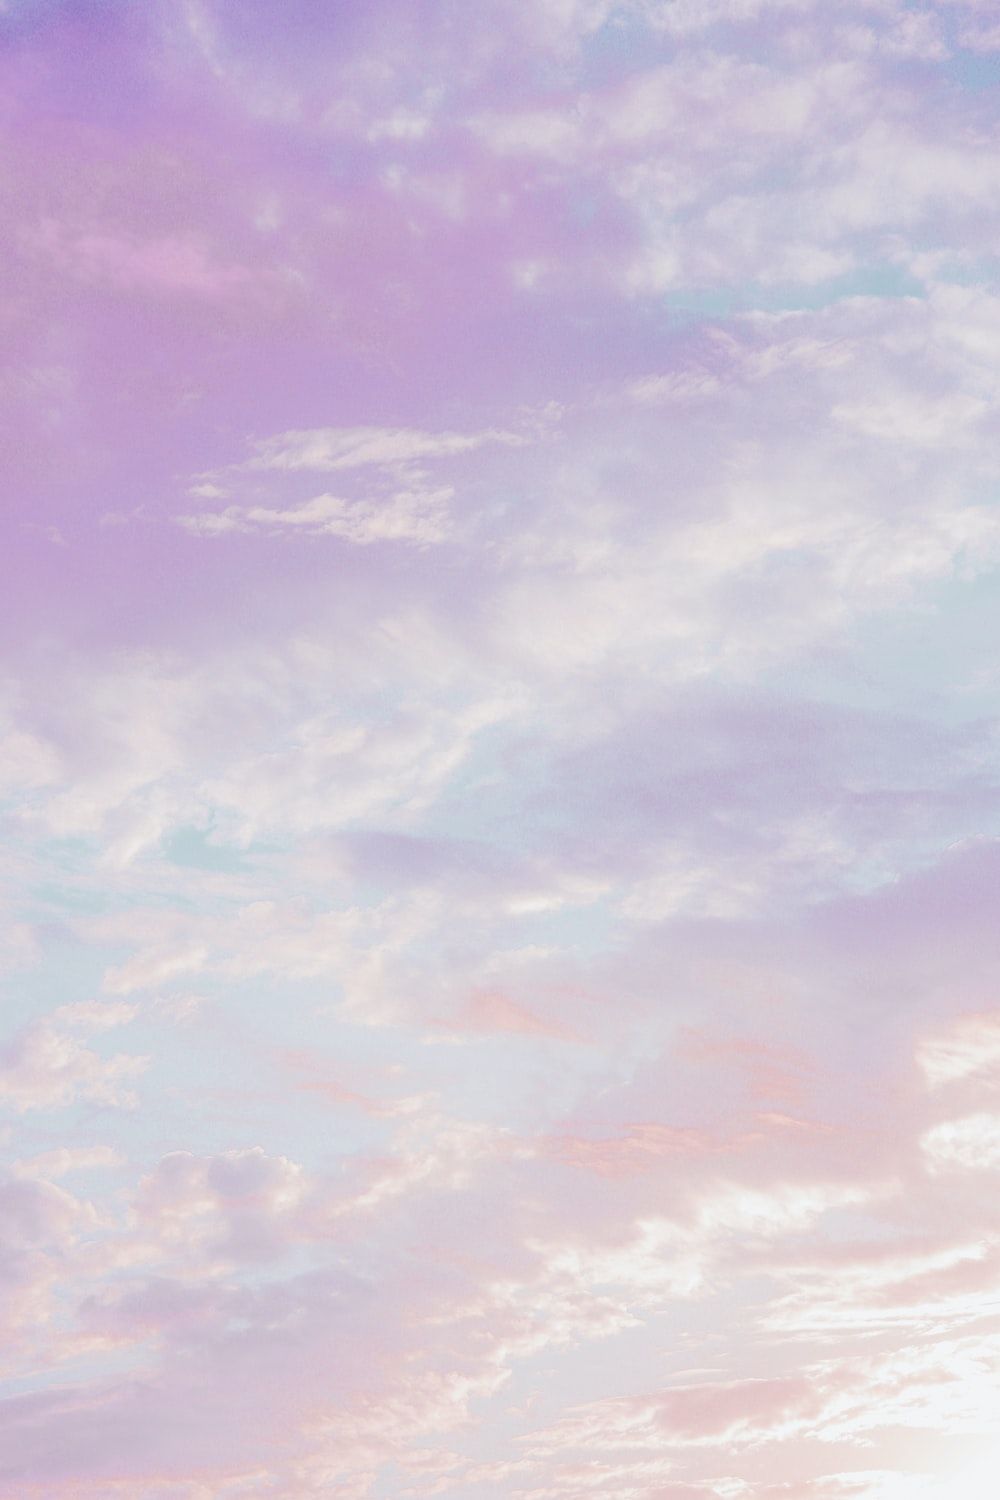 A sky with a pastel gradient - Cute purple, lavender, HD, light purple, pastel purple, sky